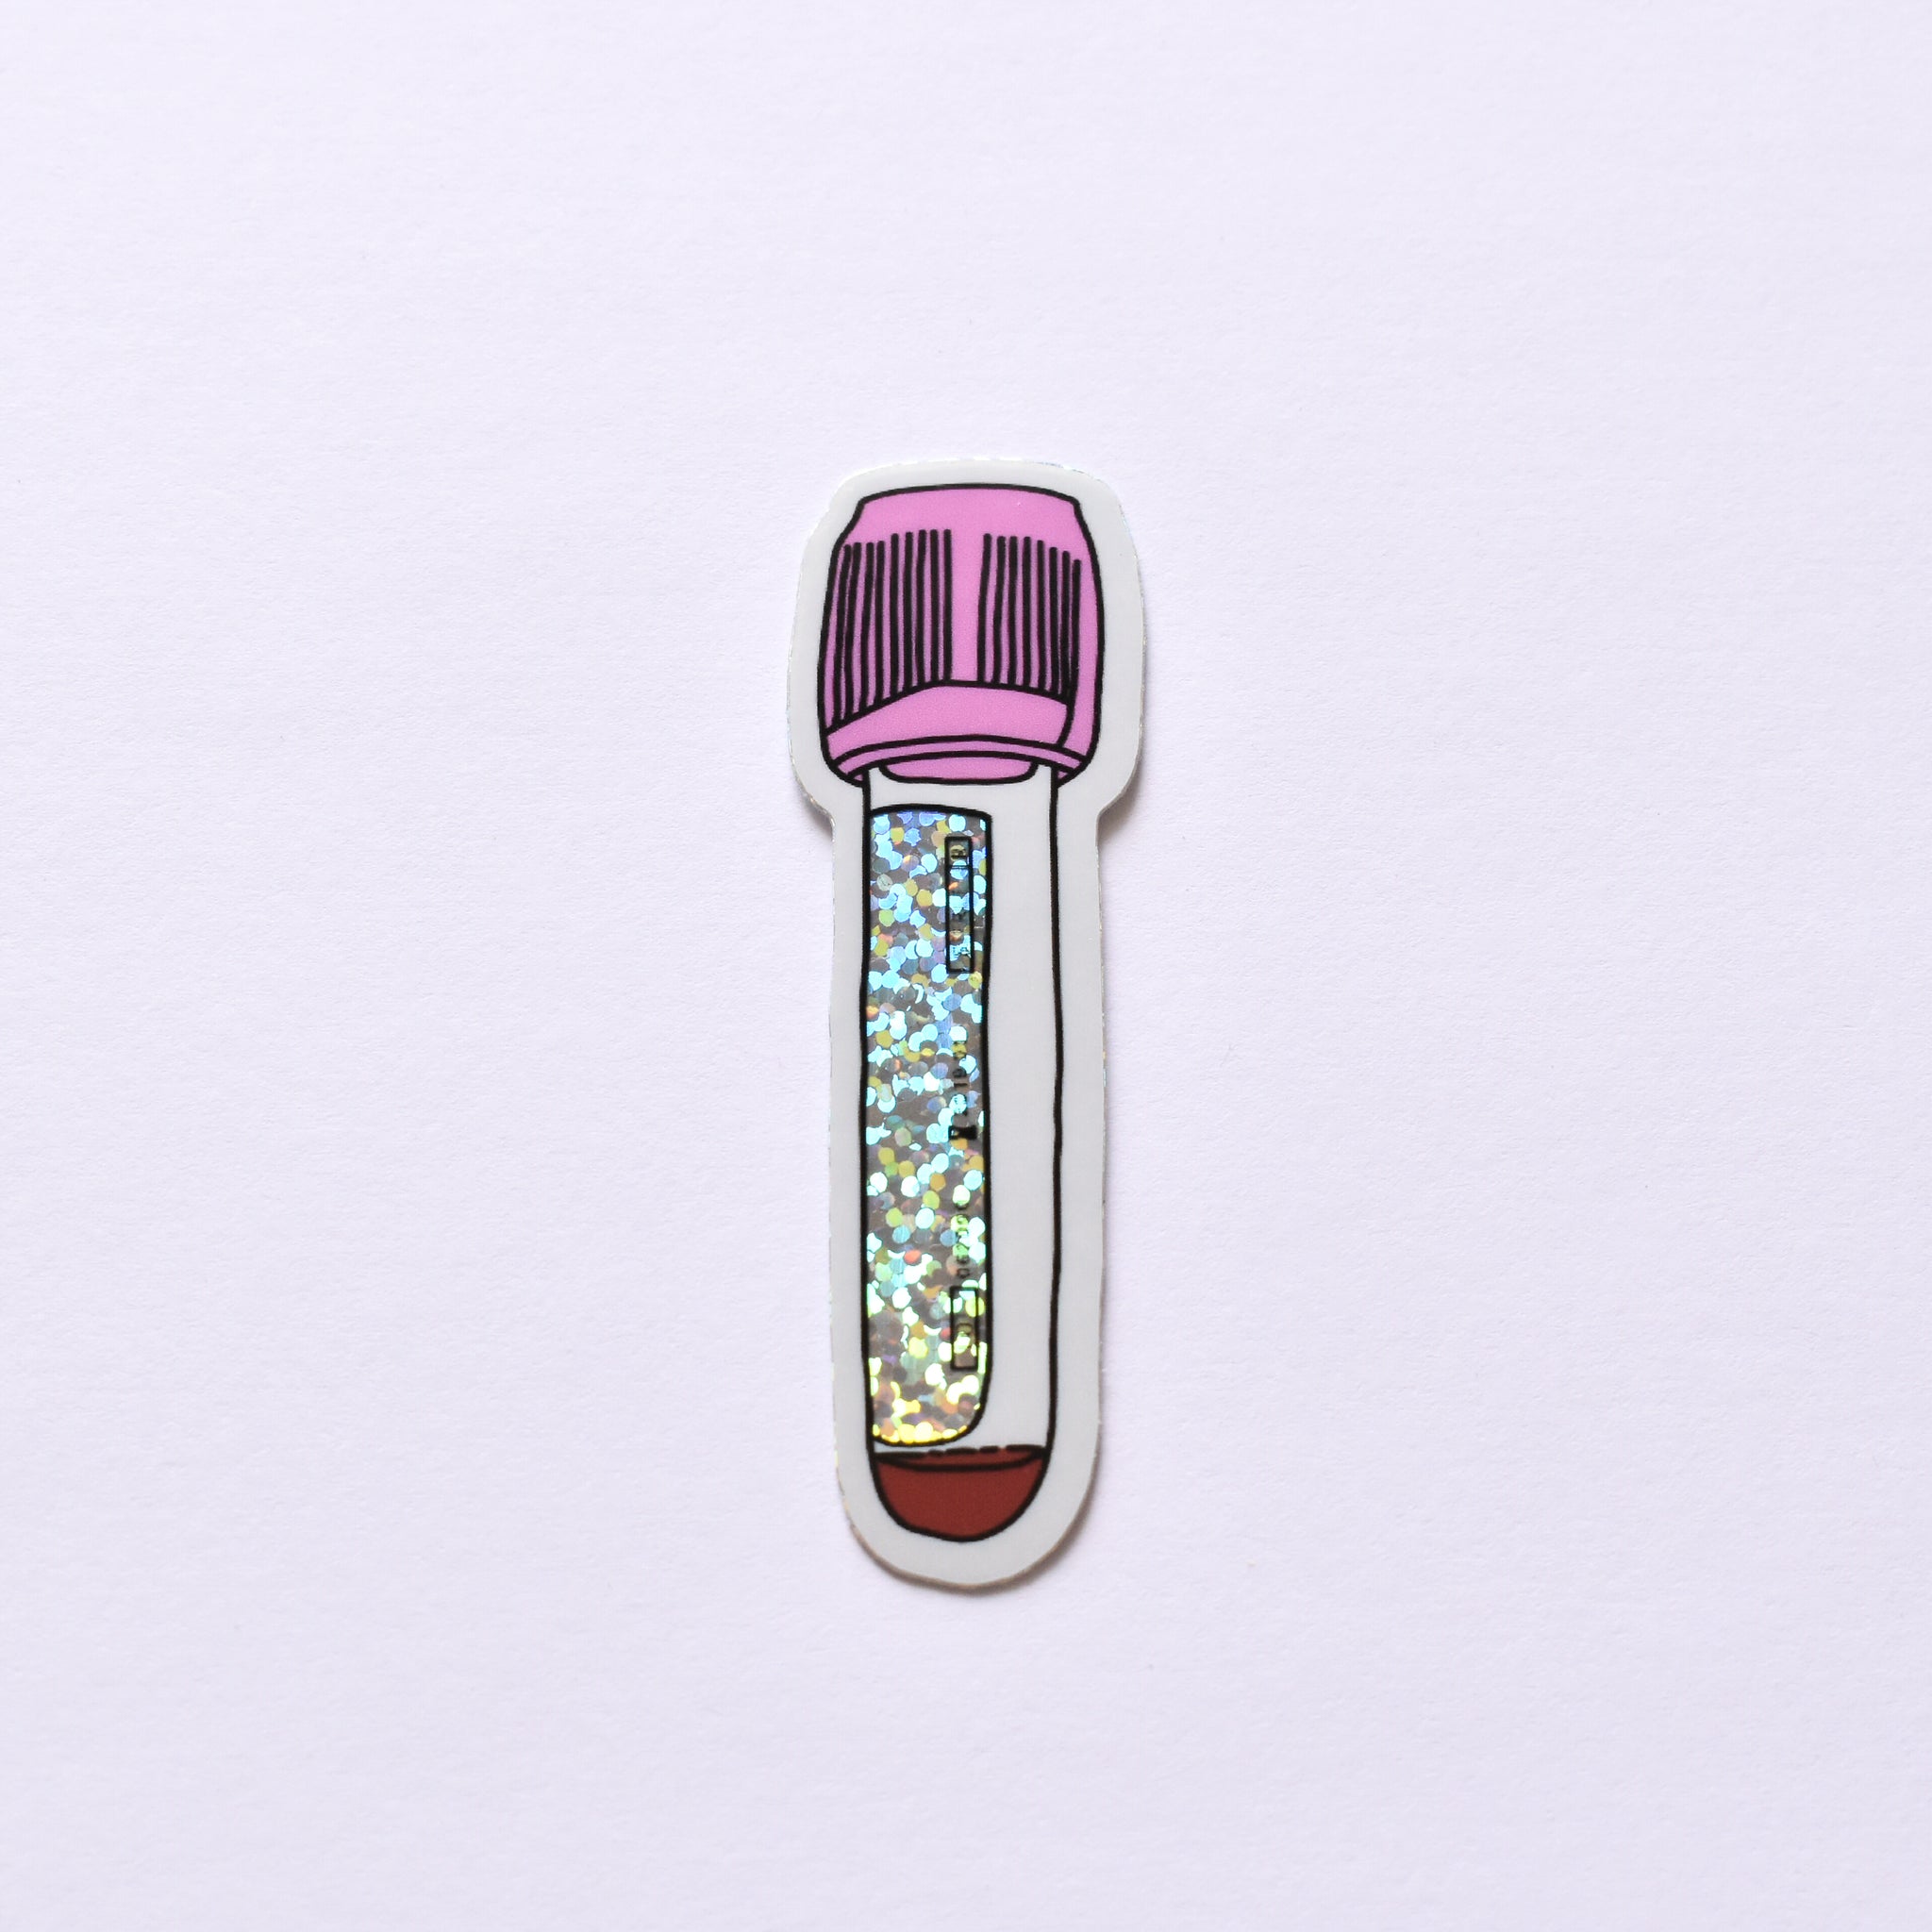 Blood collection tube | glitter holo science sticker (biology, nursing)